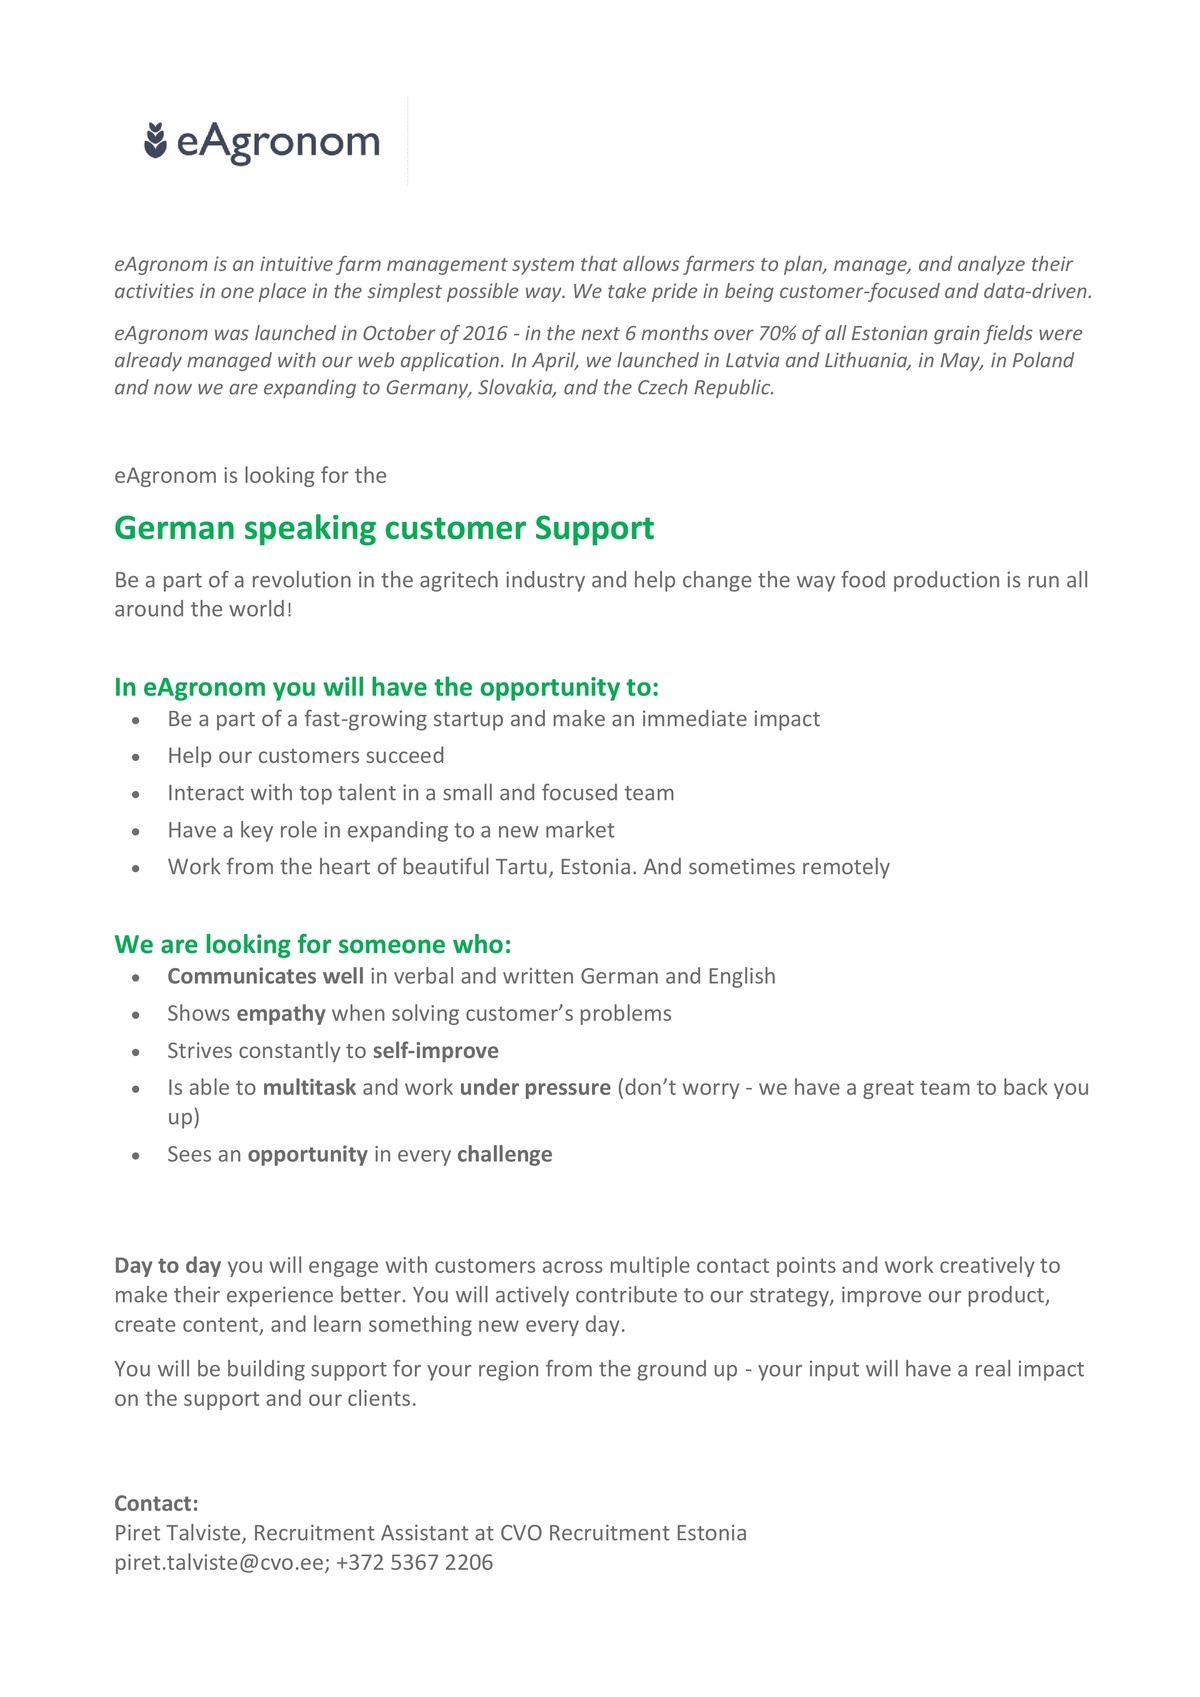 eAgronom German speaking Customer Support